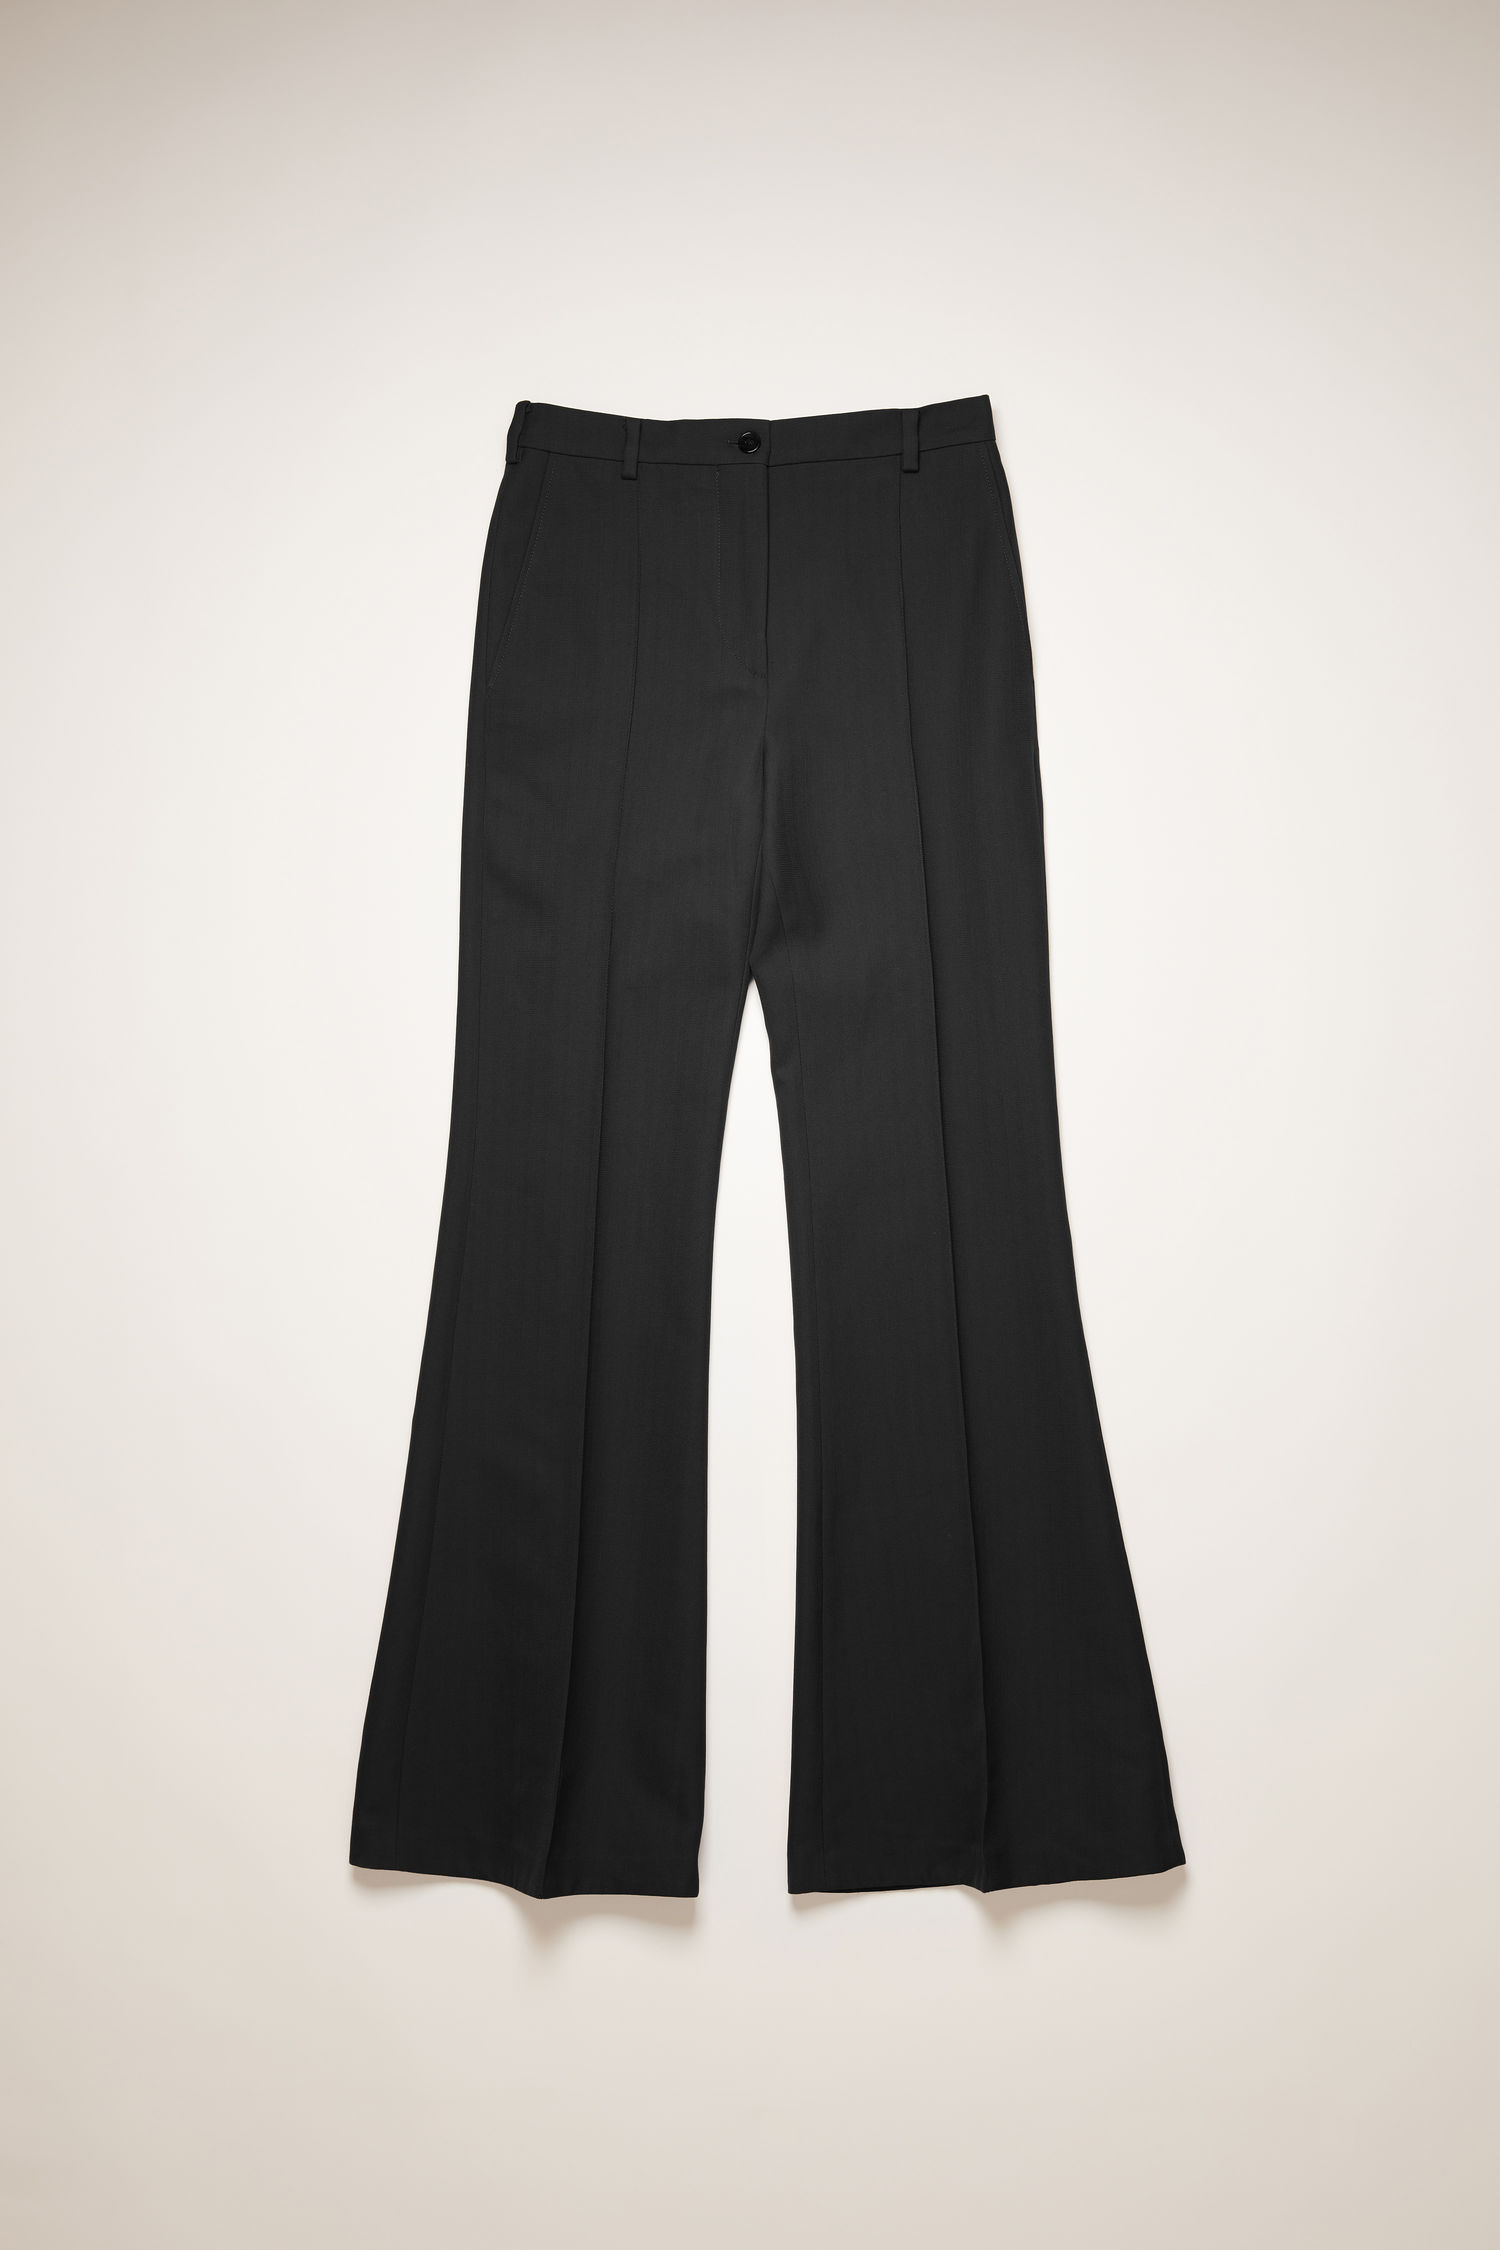 Acne Studios - Flared trousers Black